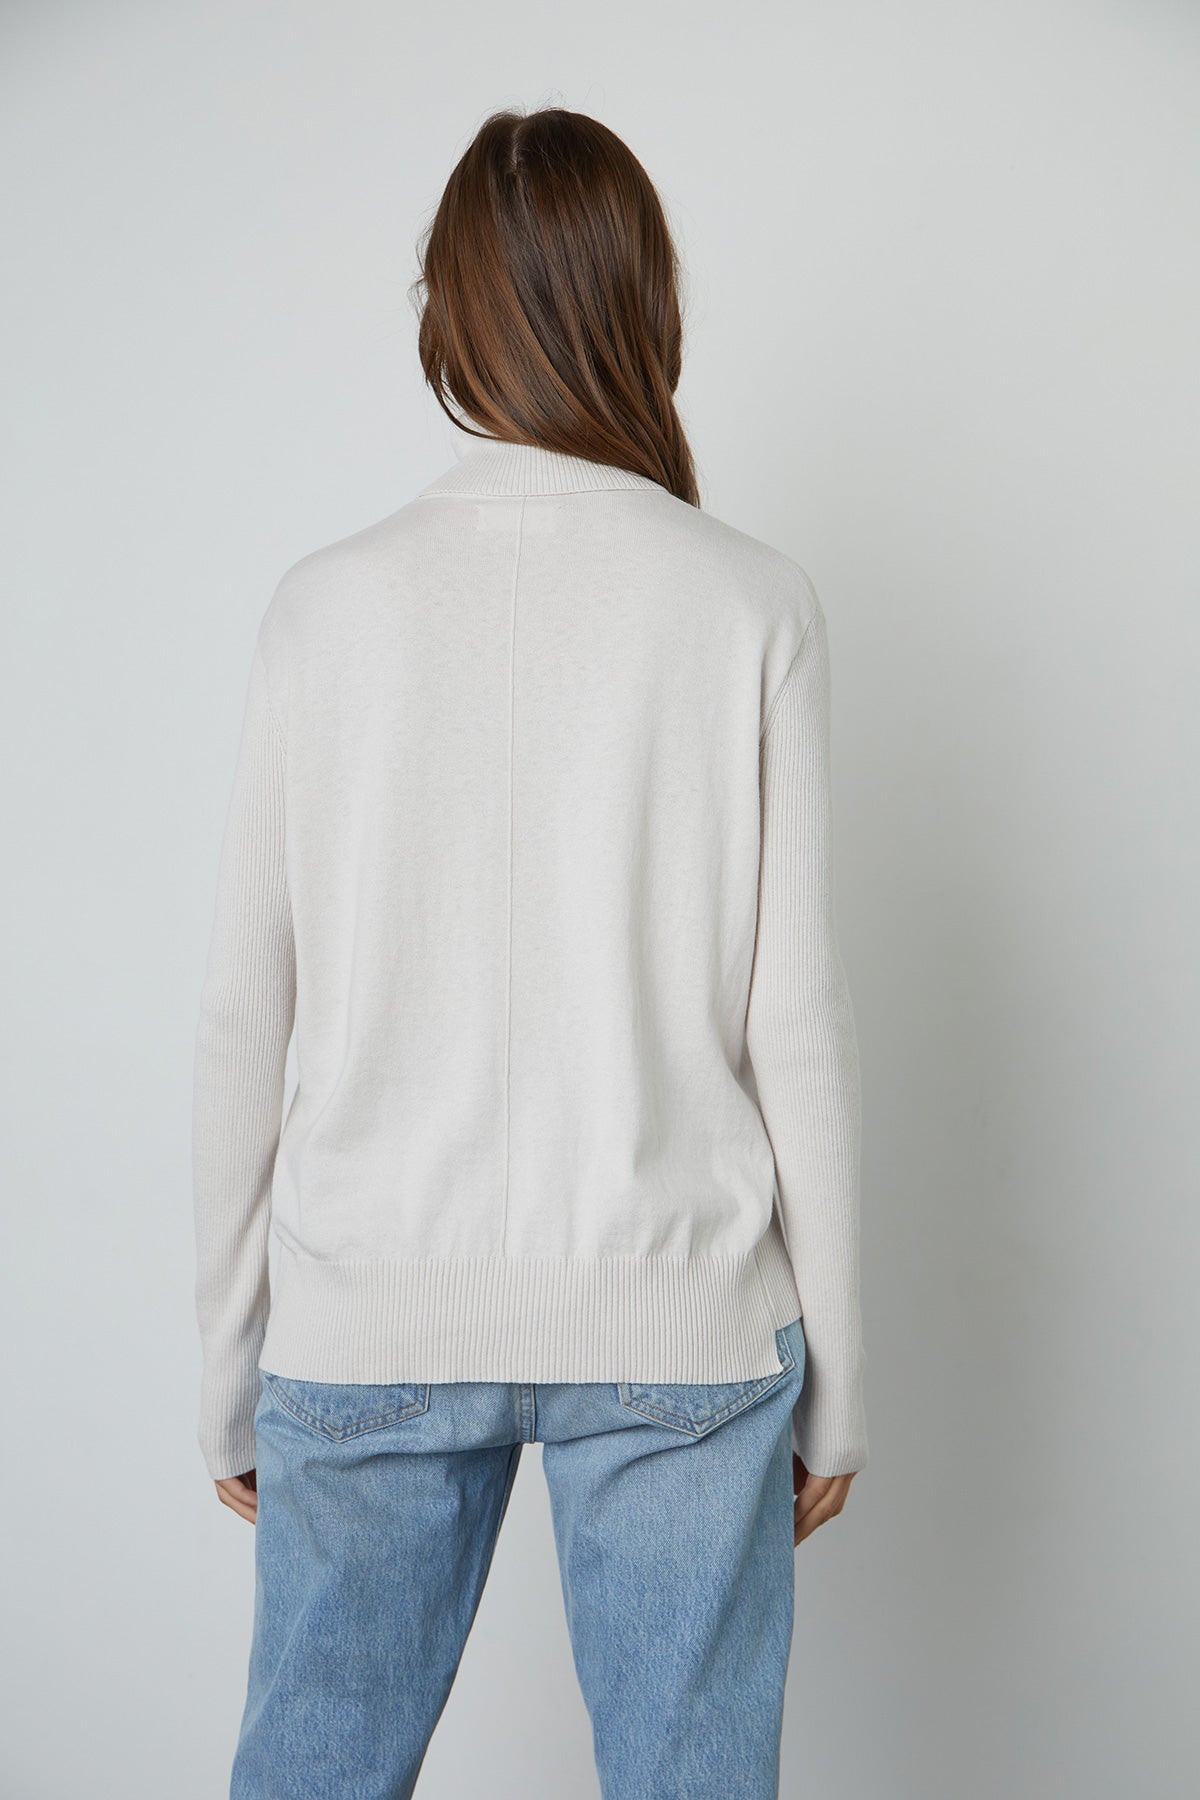   Lux Cotton Cashmere Renny Turtleneck Sweater back 